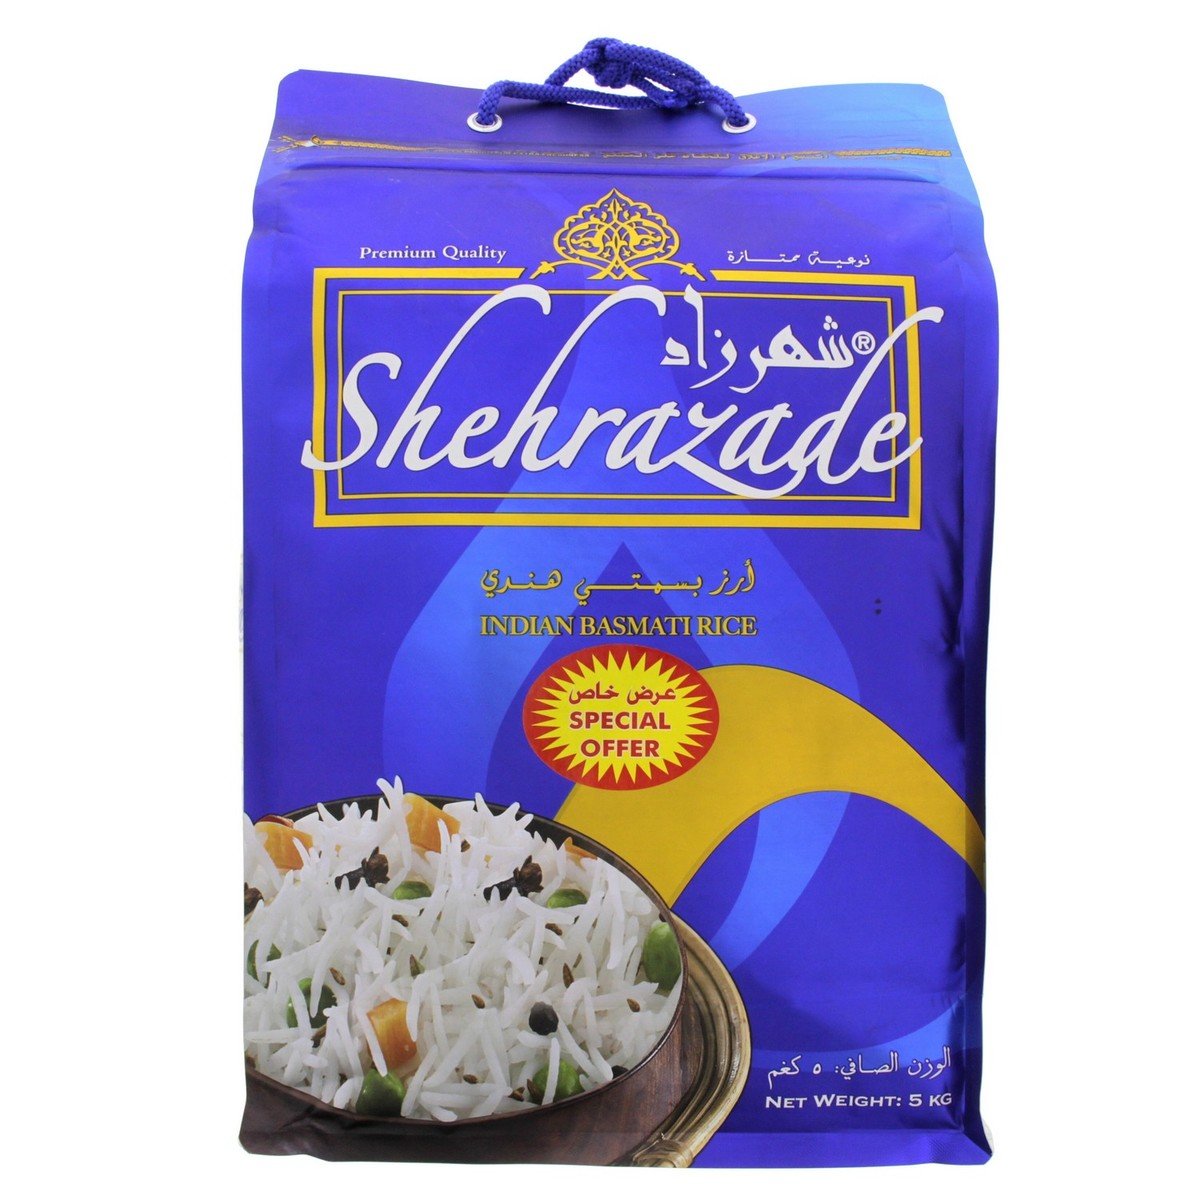 Shehrazade Indian Basmati Rice 5 kg